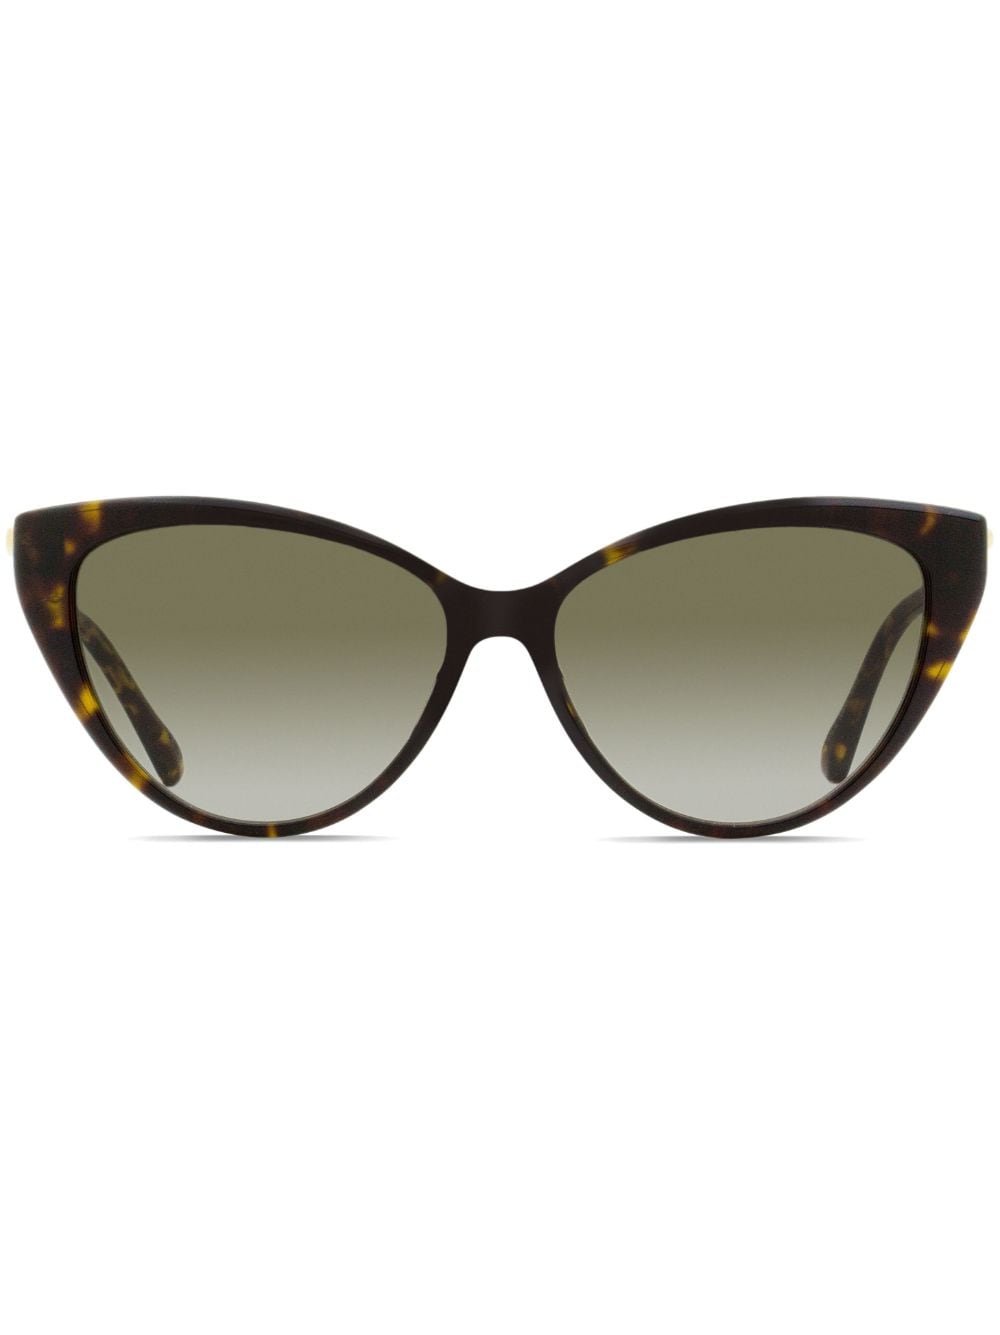 Jimmy Choo Eyewear Val cat-eye frame sunglasses - Brown von Jimmy Choo Eyewear